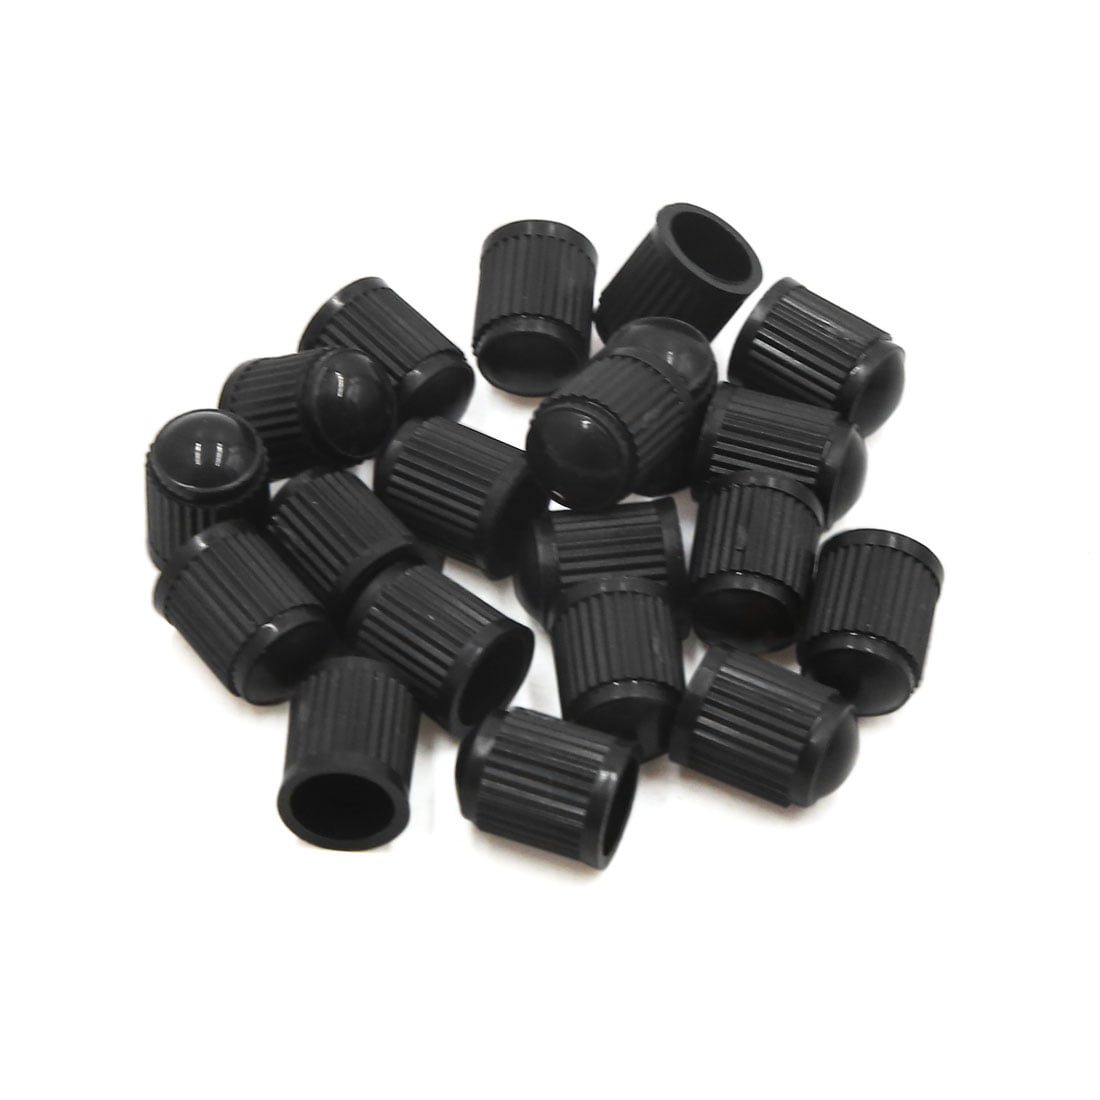 4 Regular Black Plastic Tire/Wheel Stem Pressure Valve Caps for car-truck-hotrod 